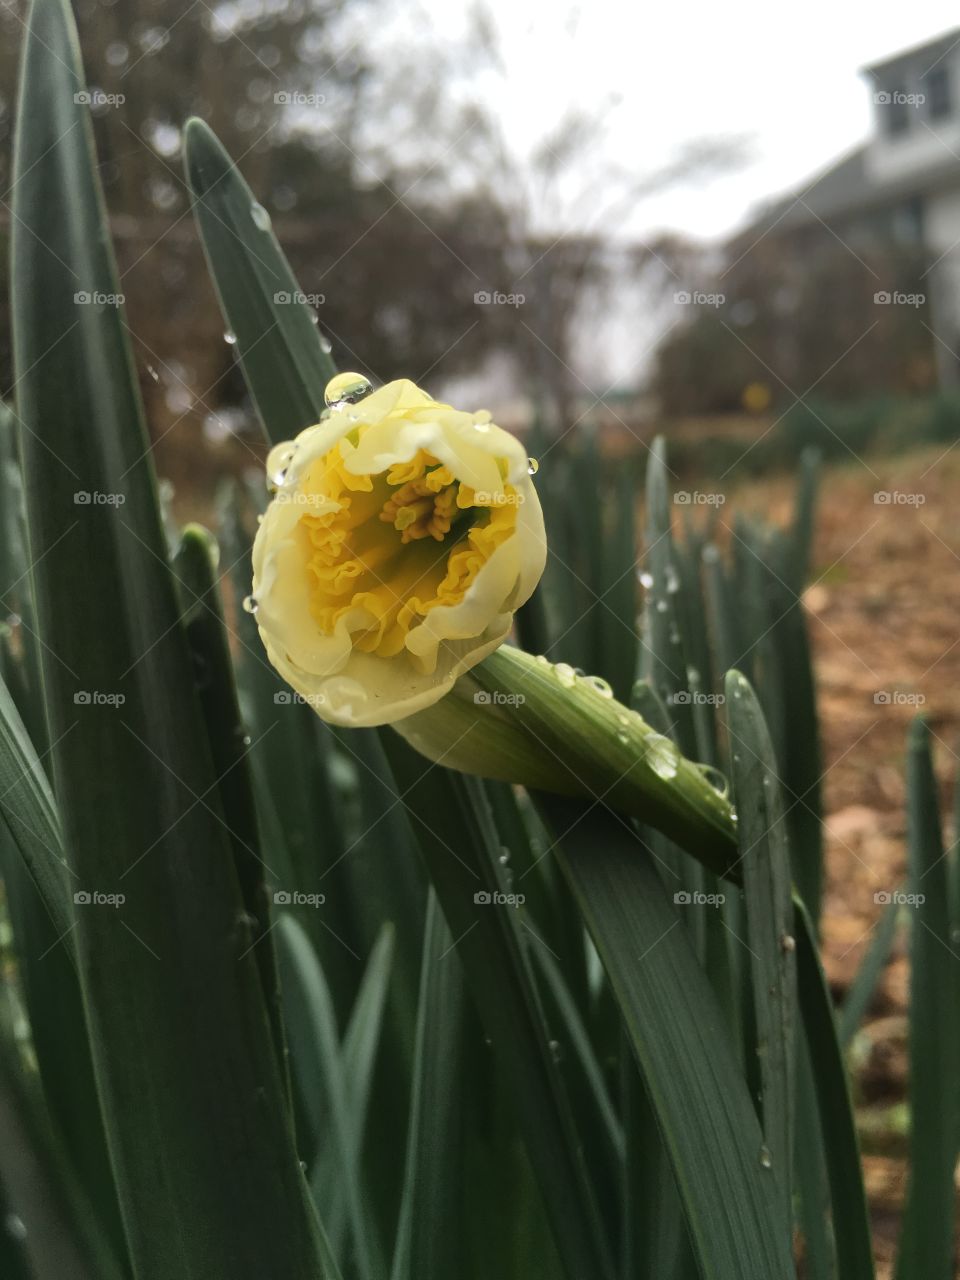 Raindrops on daffodil